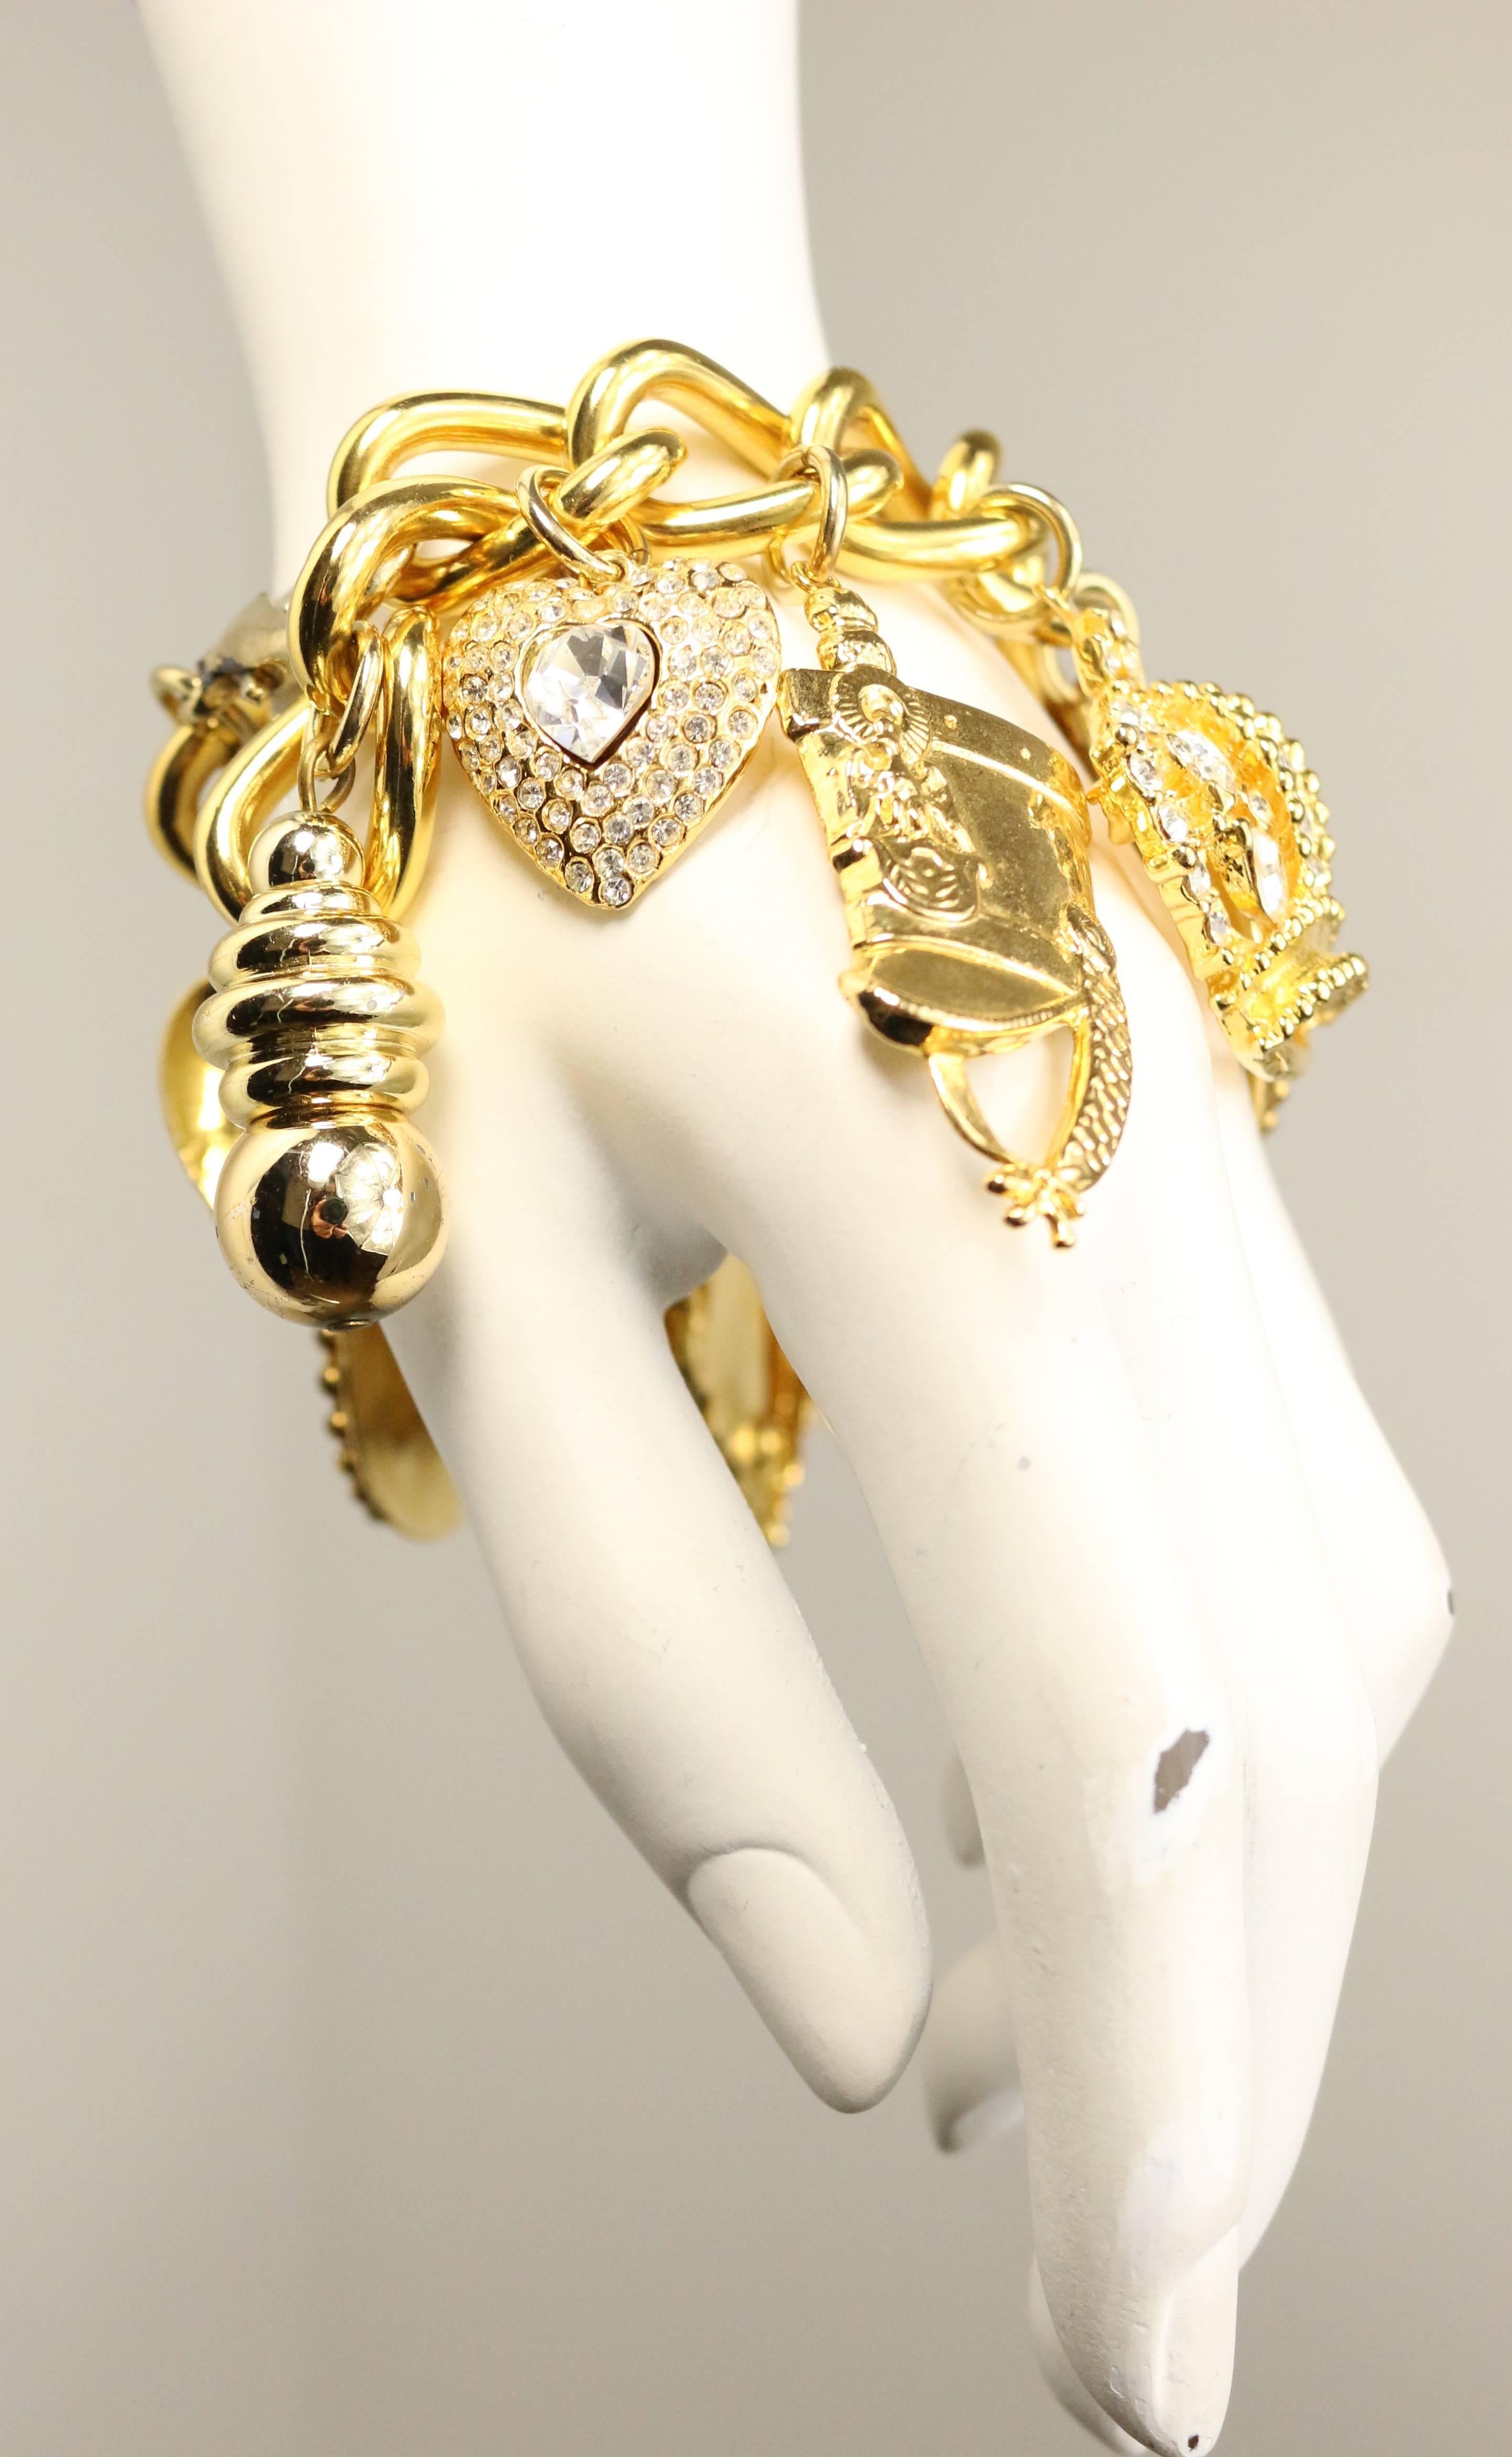 - Vintage 80s gold chain charms (crystal rhinestones hearts, crowns, key lock, etc... ) bracelet. Unique piece!!!

